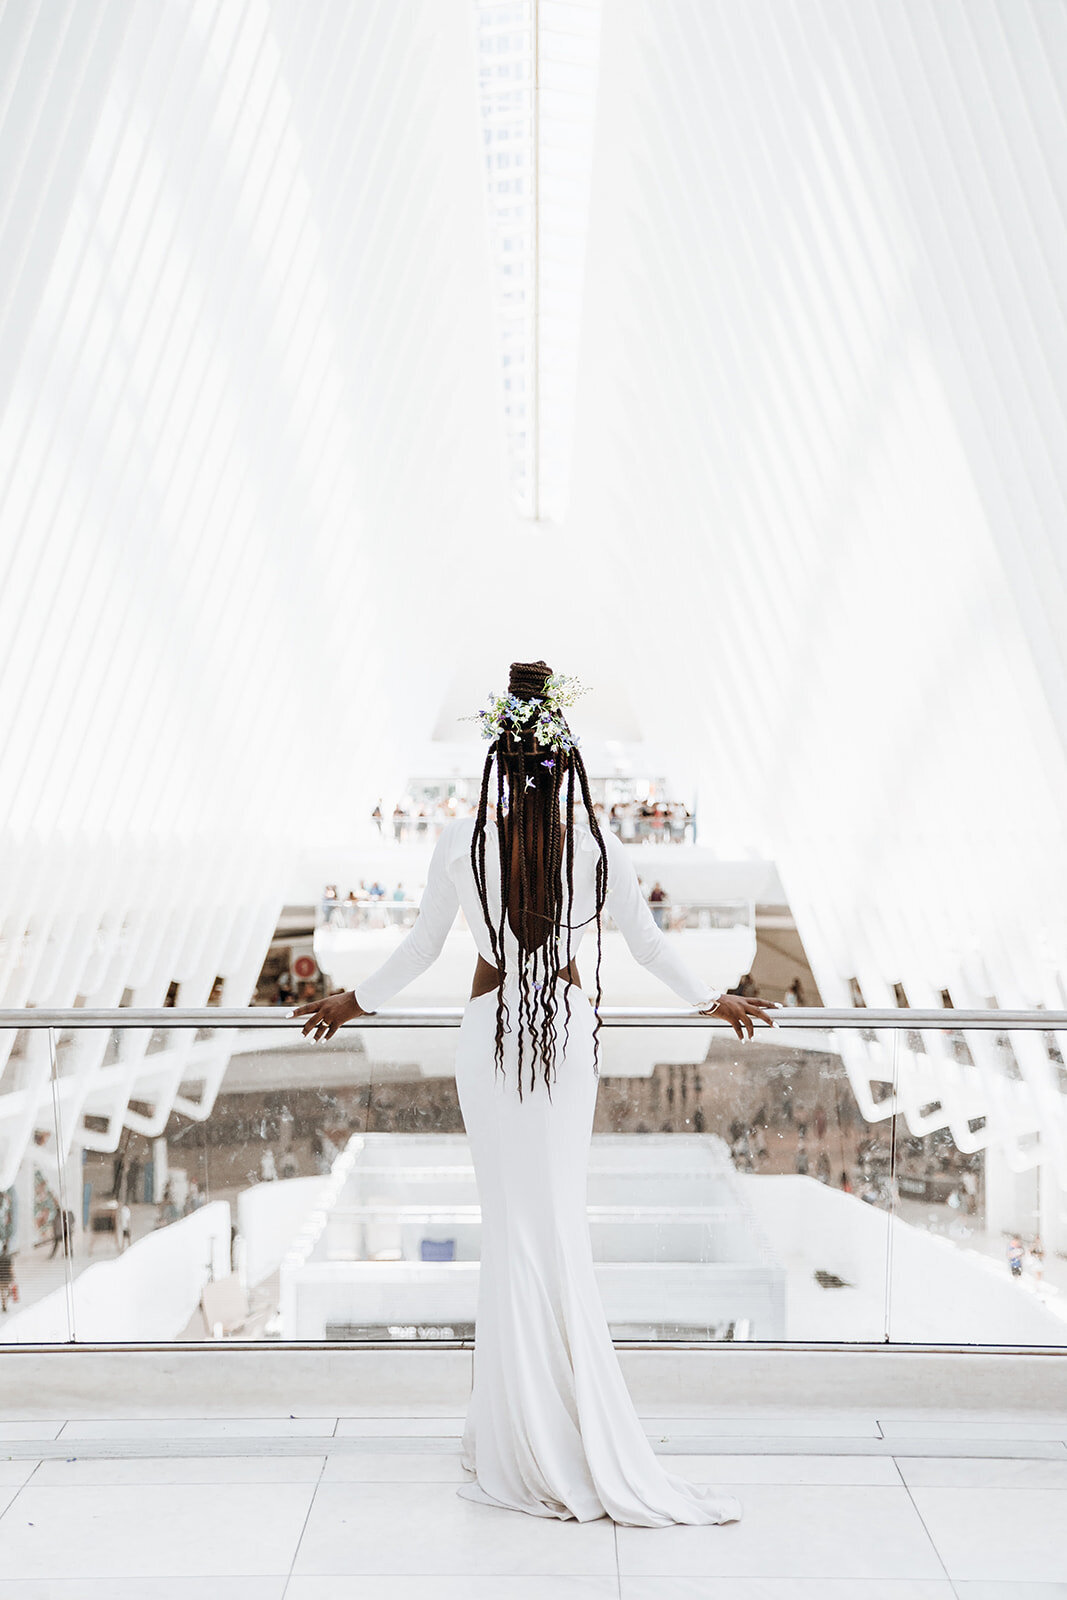 the-oculus-world-trade-center-new-york-city-destination-wedding-bridal-photography-michael-cozzens-47